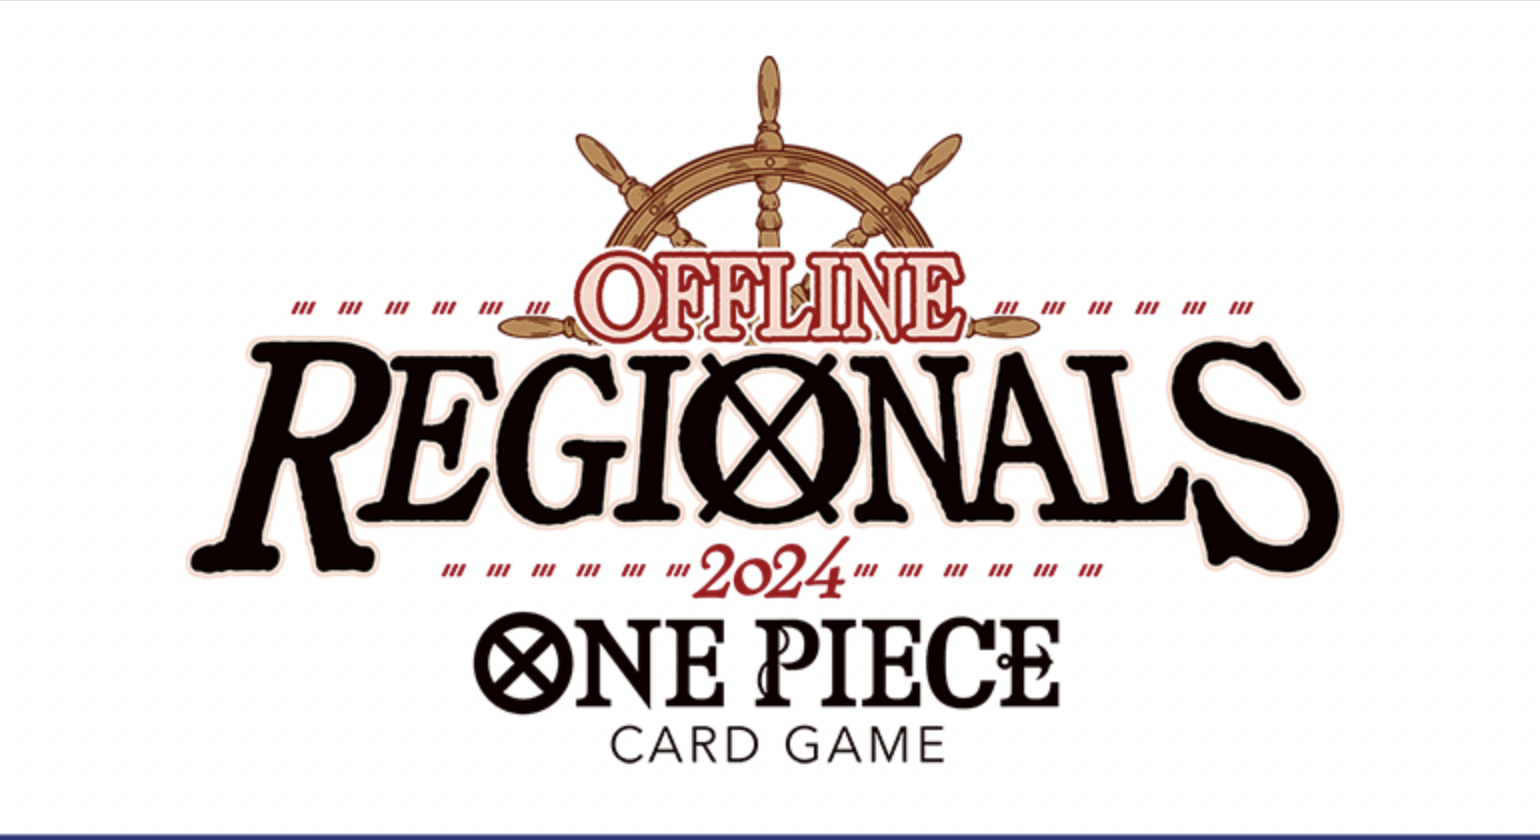 More Info for Offline One Piece Regionals